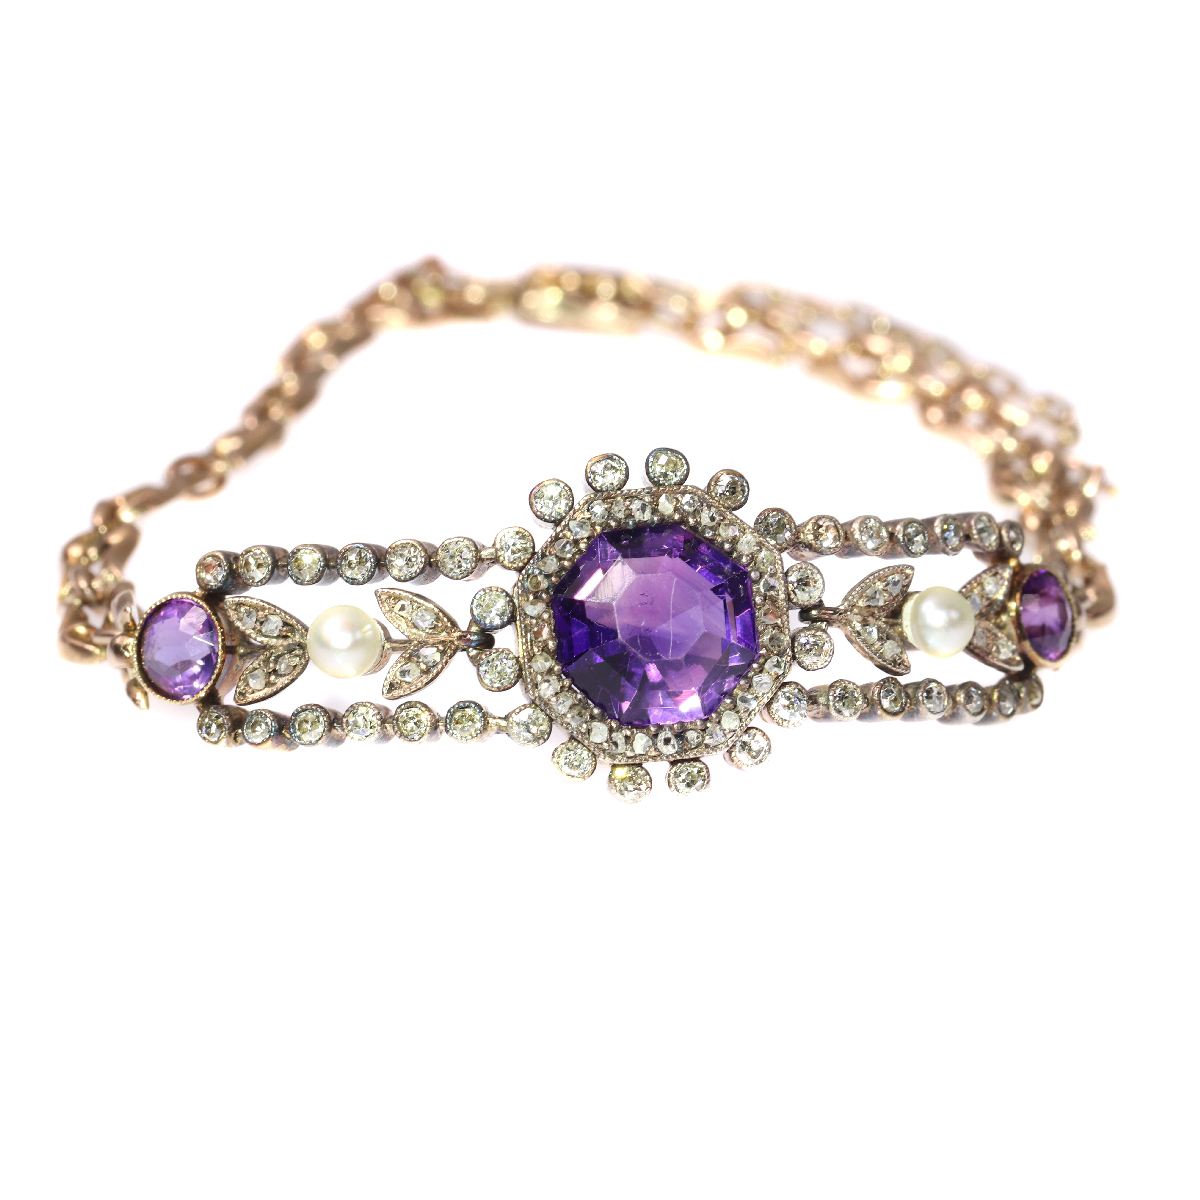 Purple Majesty: A Victorian Bracelet's Tale of Nobility and Wisdom